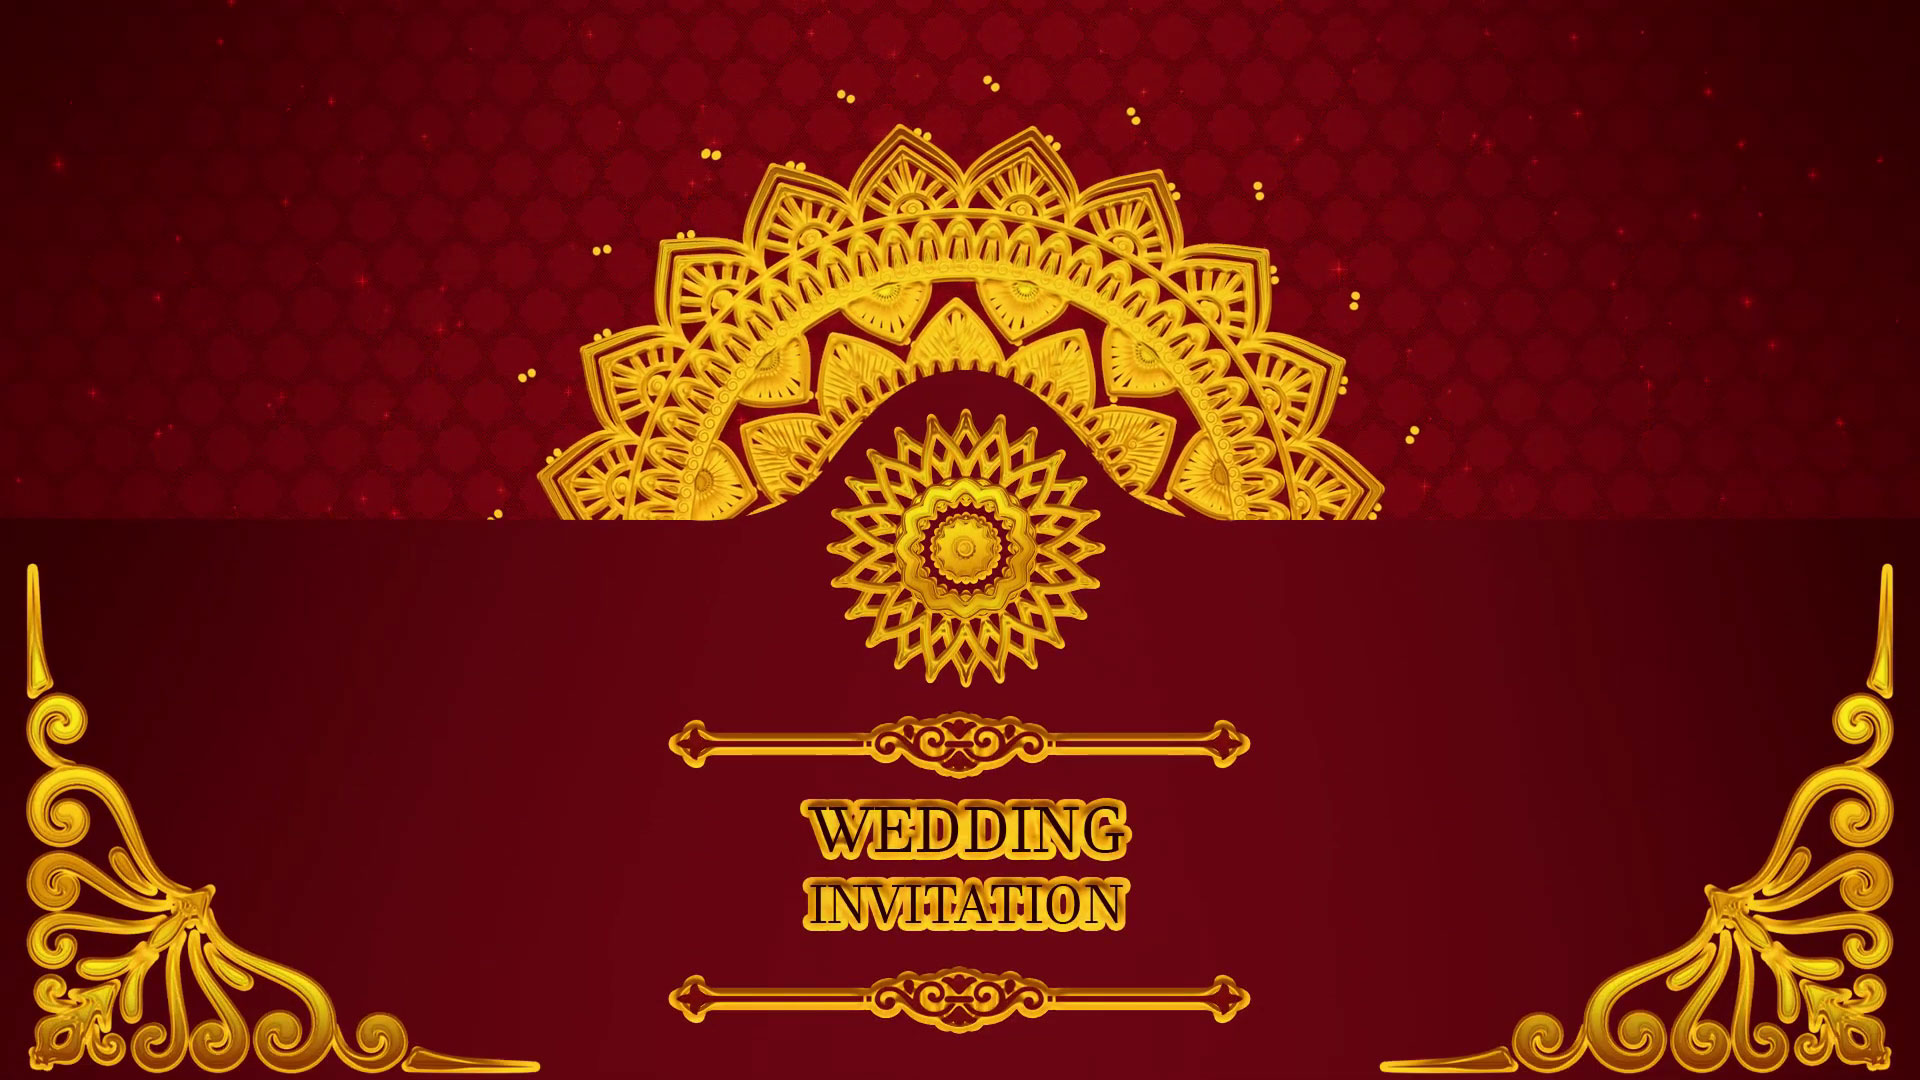 Royal Wedding Invitation Video | Wedding Invitation Video free for Whatsapp  | All Design Creative